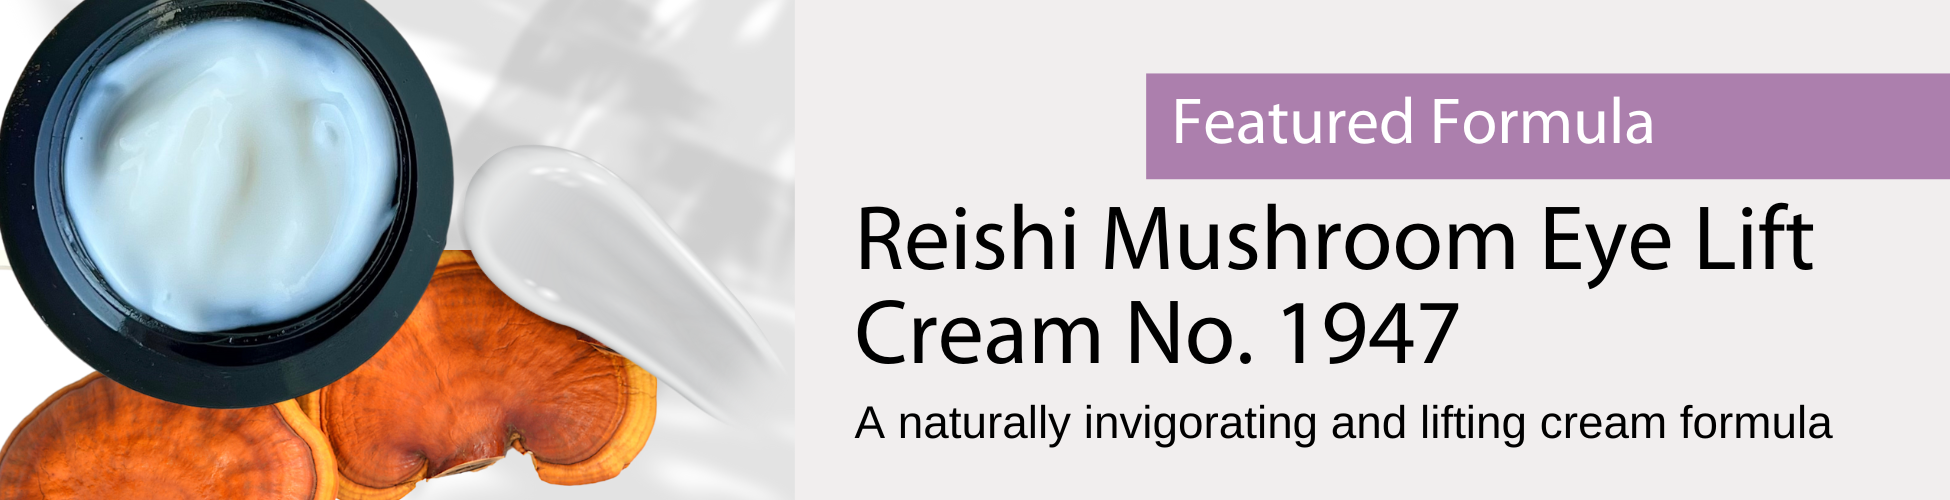 Formula for Reishi Mushroom Eye Lift Cream